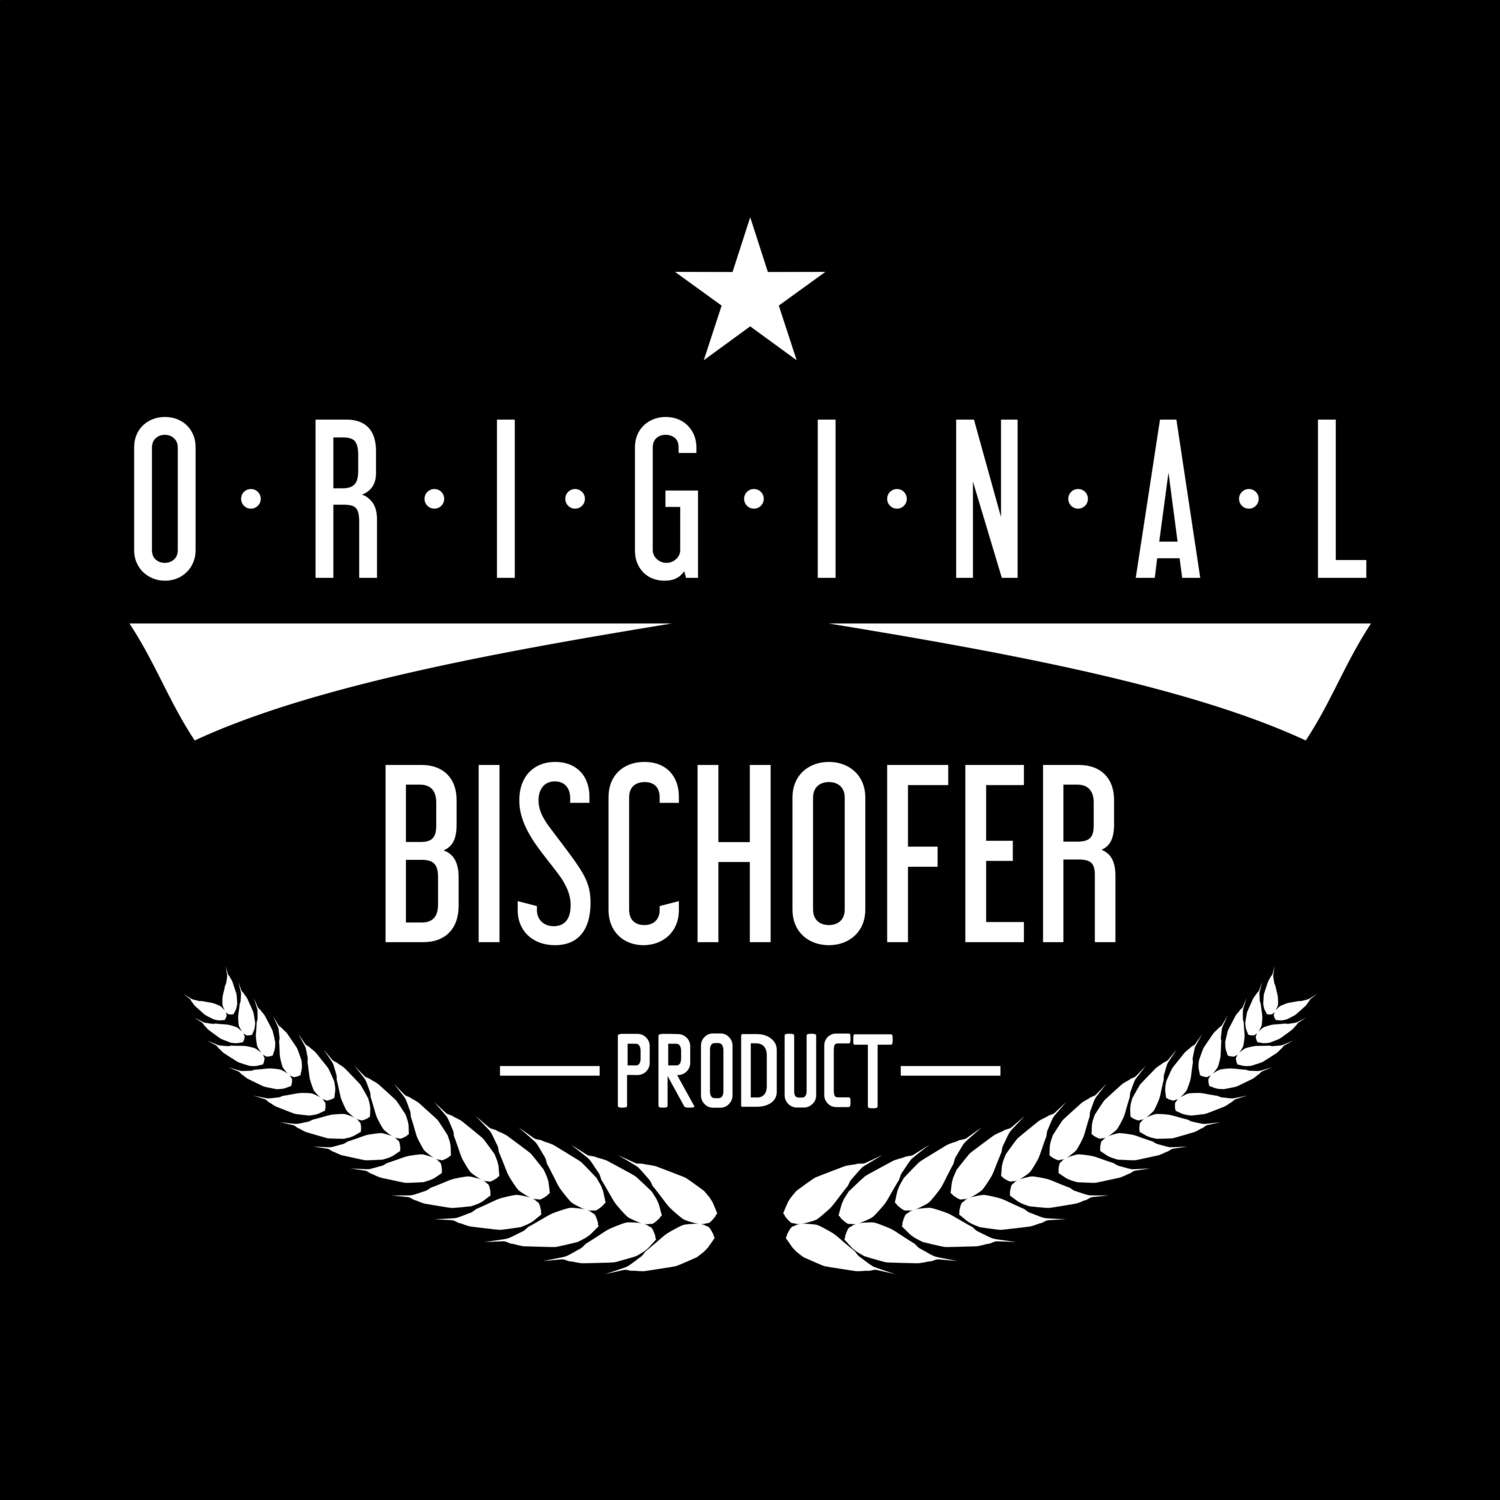 Bischofer T-Shirt »Original Product«